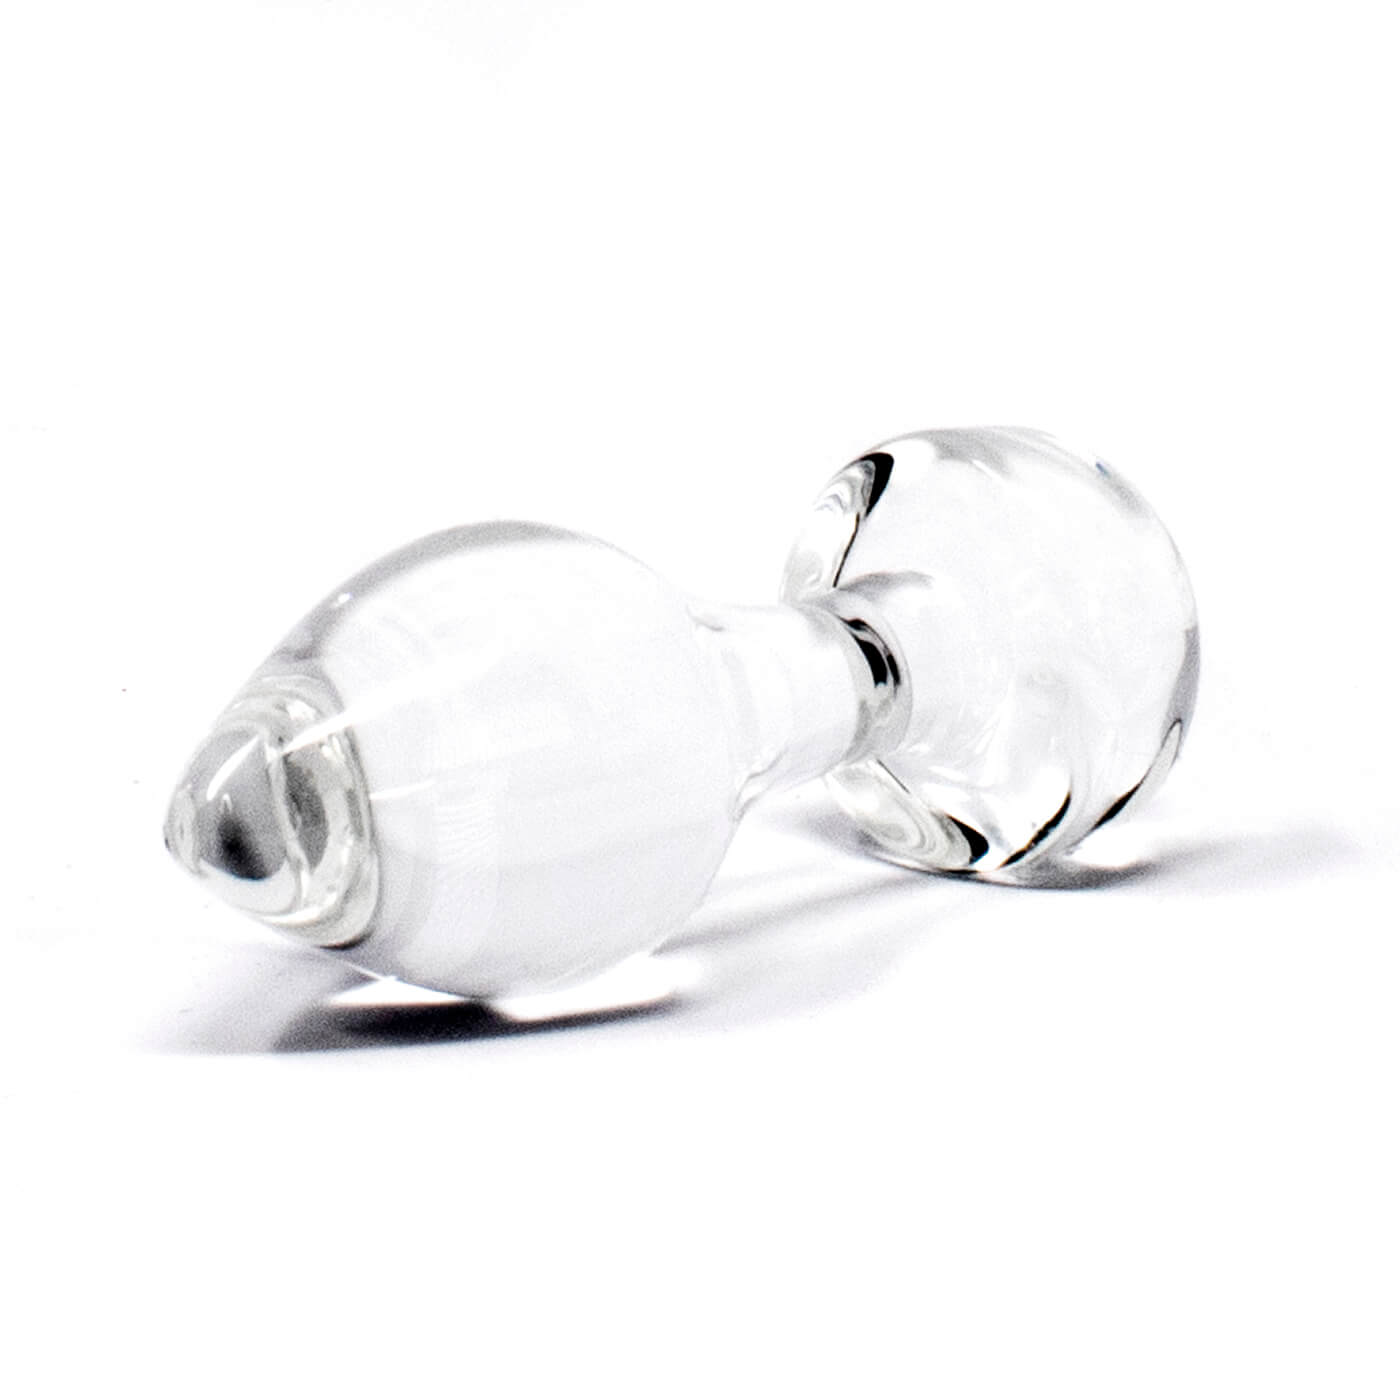 Icicles No. 44 Beginners Glass Plug